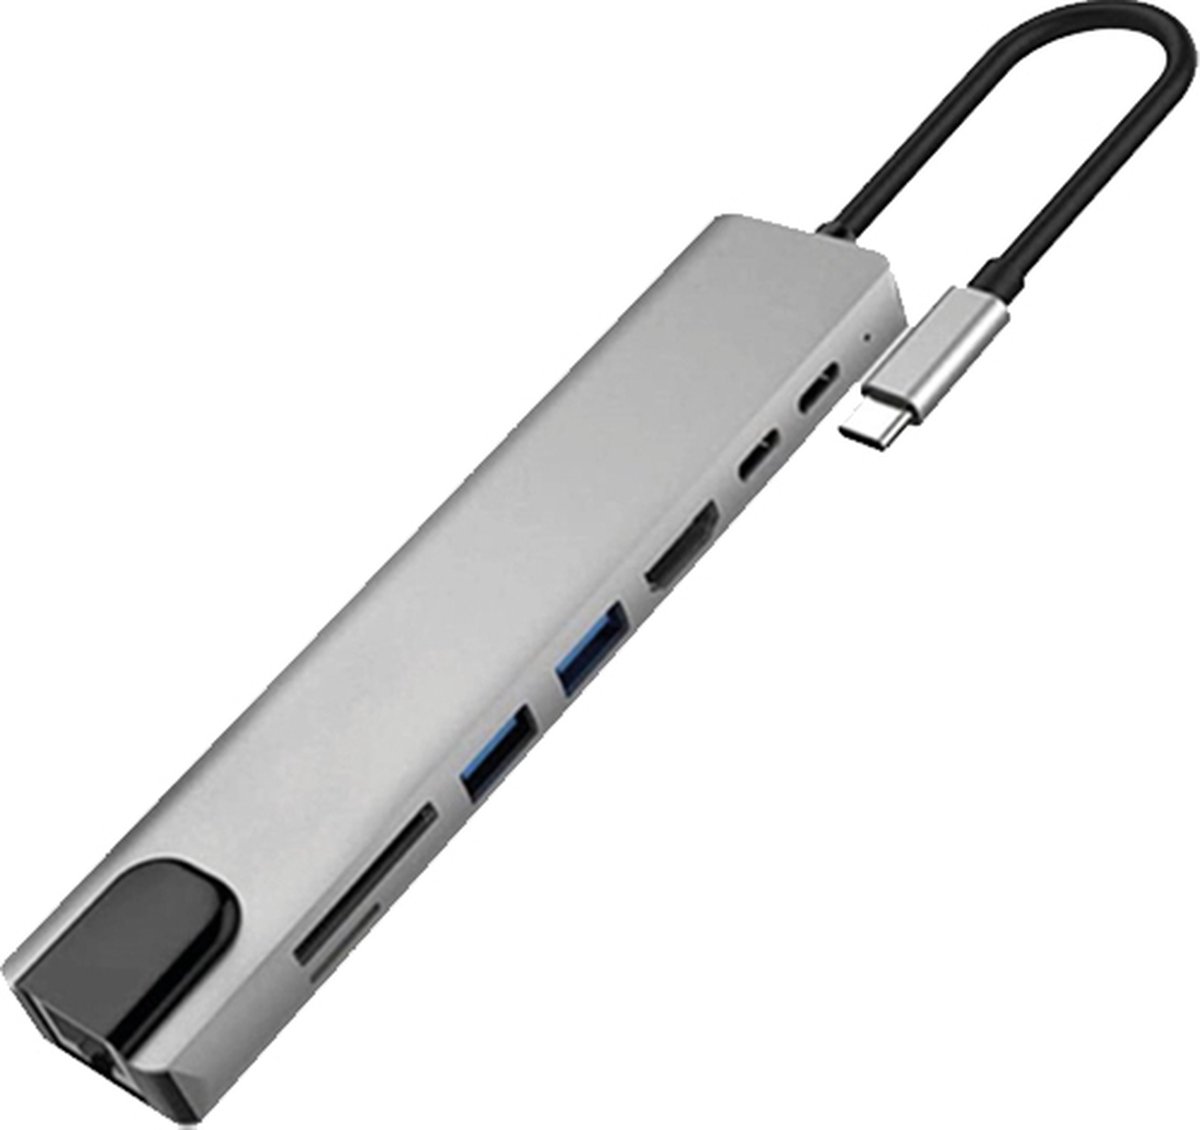 8-in-1 USB C Hub - 2x USB 3.0 - 4K UHD HDMI - Ethernet - Adapter